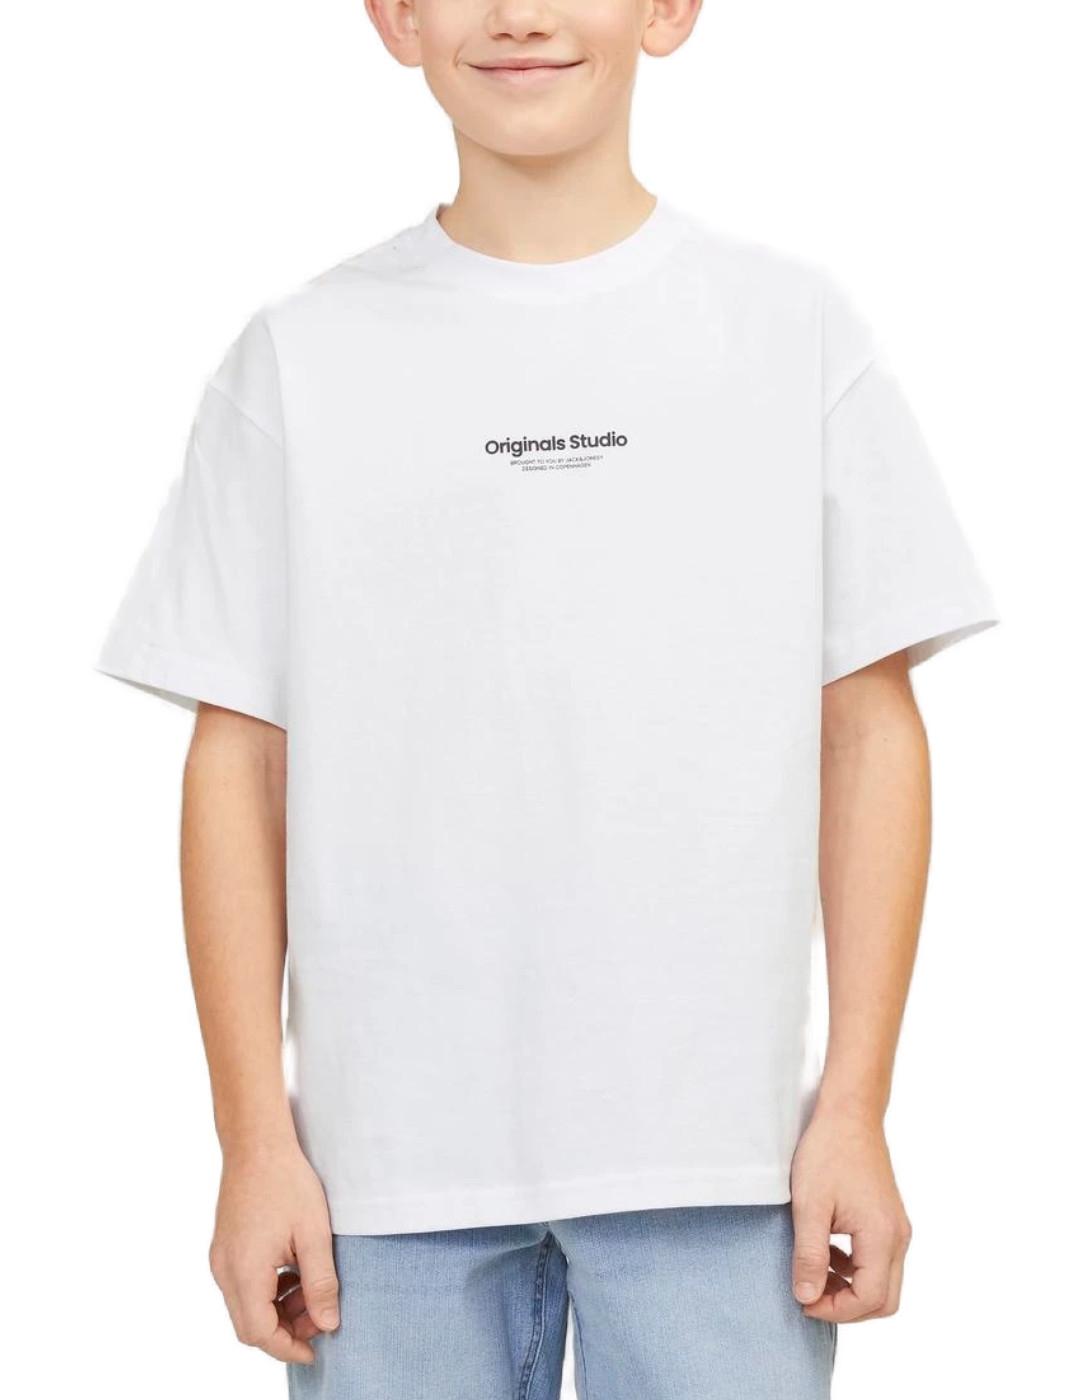 Camiseta Jack&Jones Junior blanca manga corta de niño